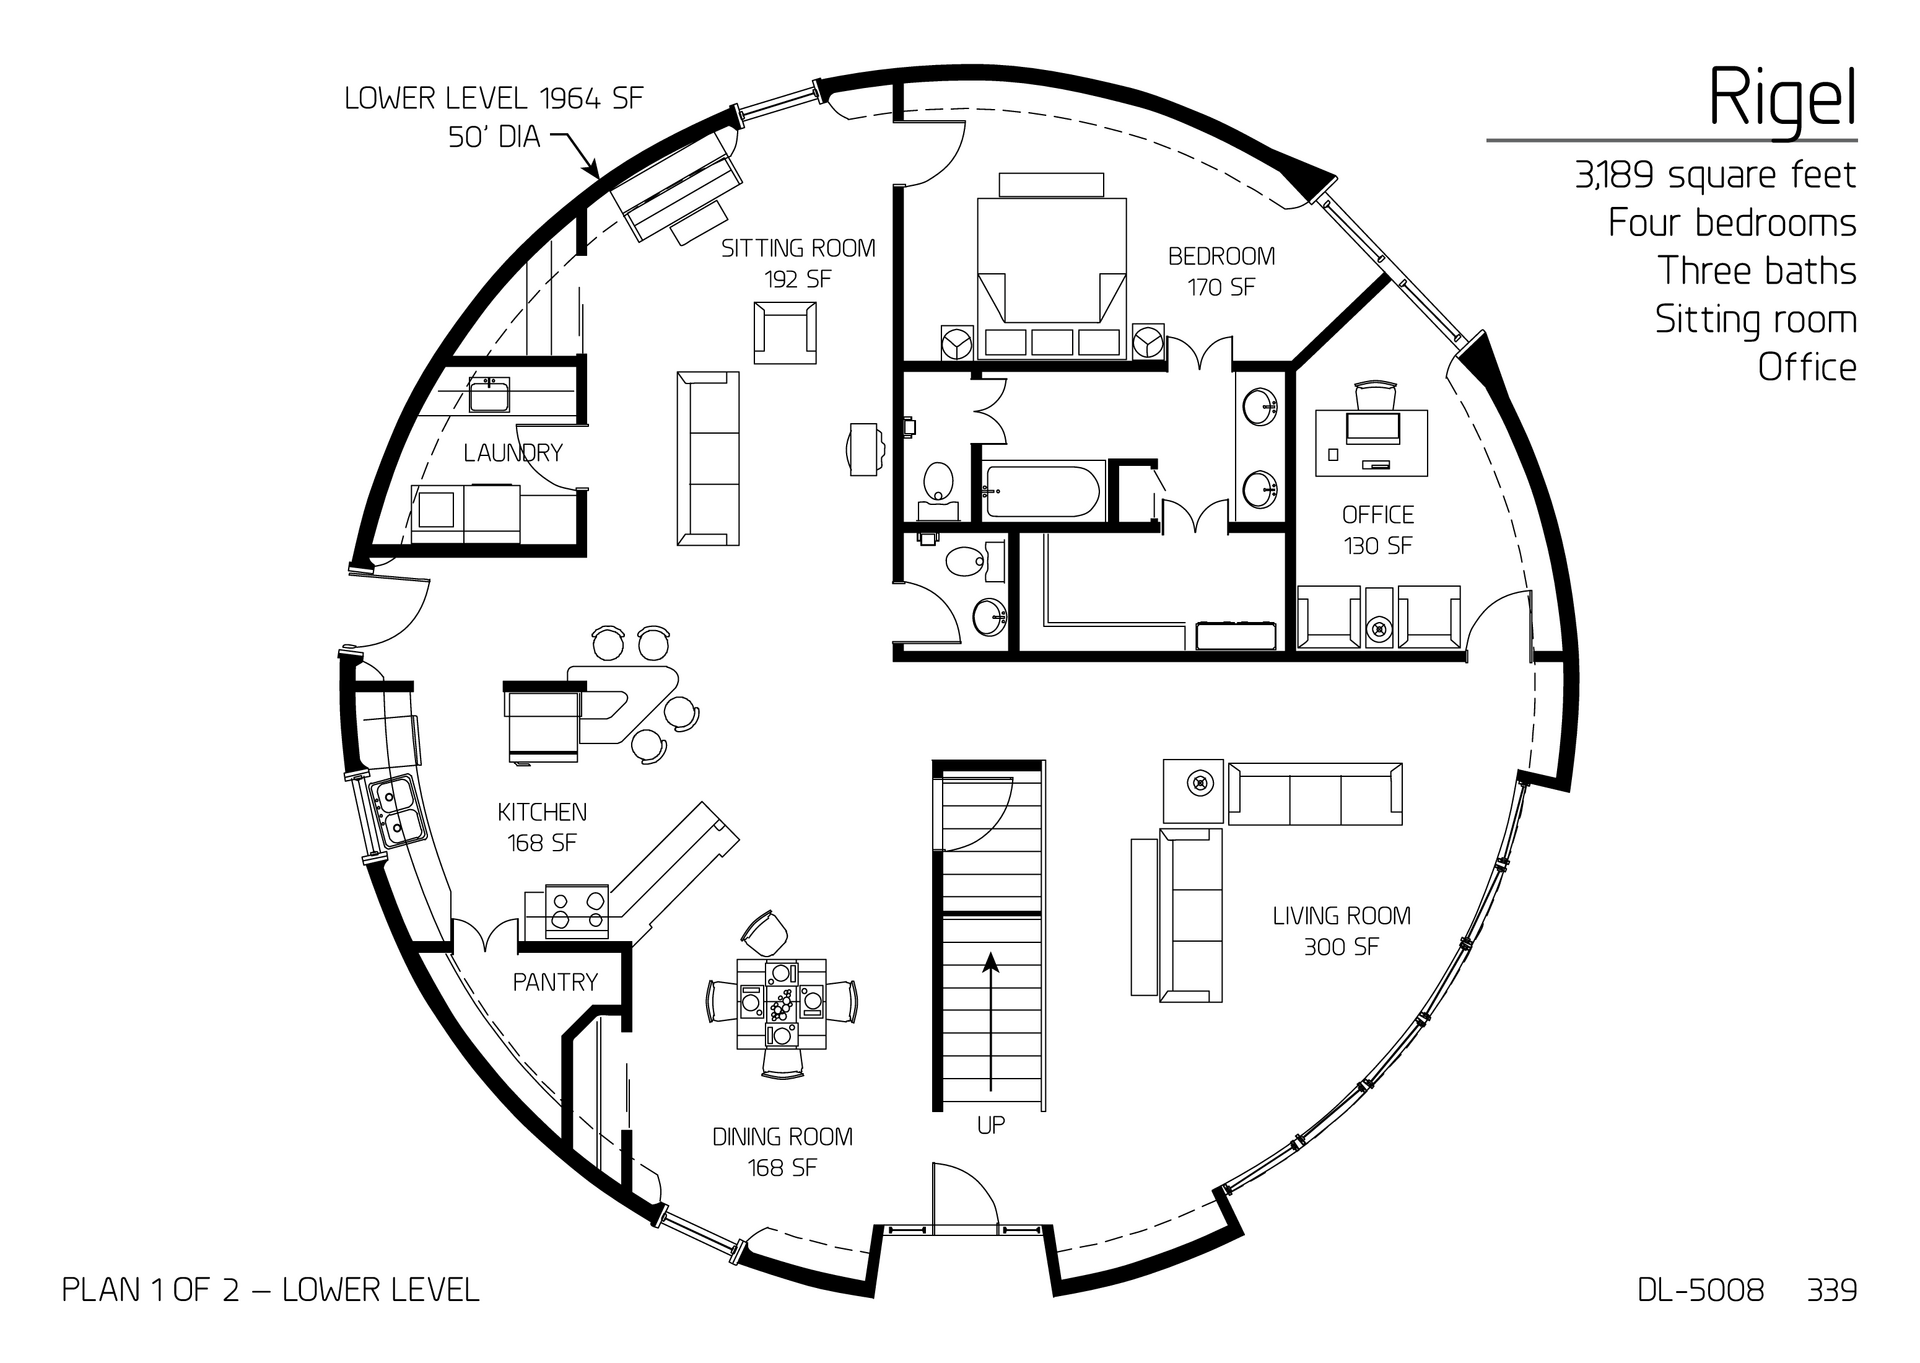 Rigel: The Main Floor of a 50' Diameter,  3,189 SF, Four-Bedroom, Three-Bath Floor Plan.